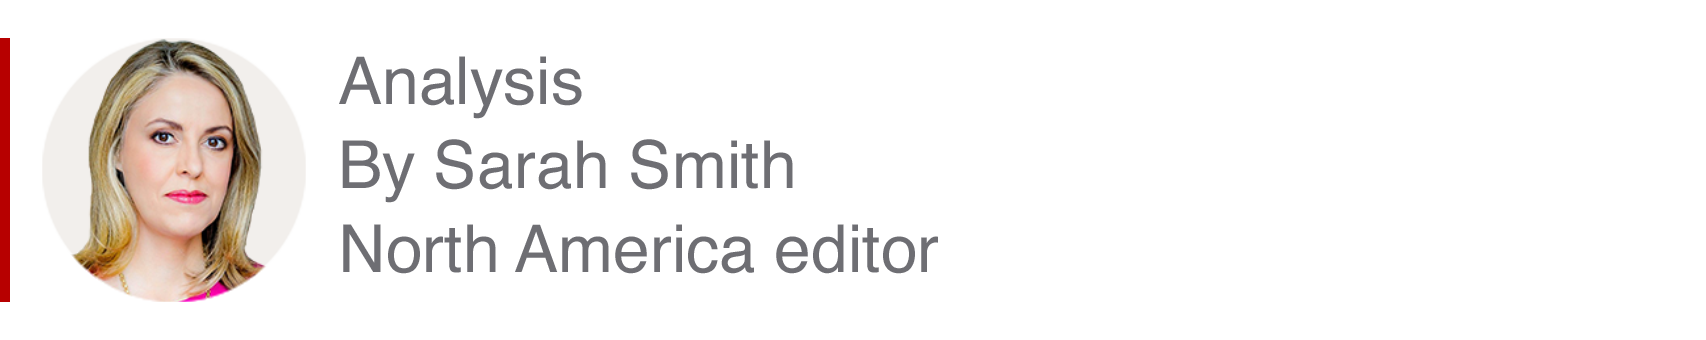 Analysis box by Sarah Smith, North America editor